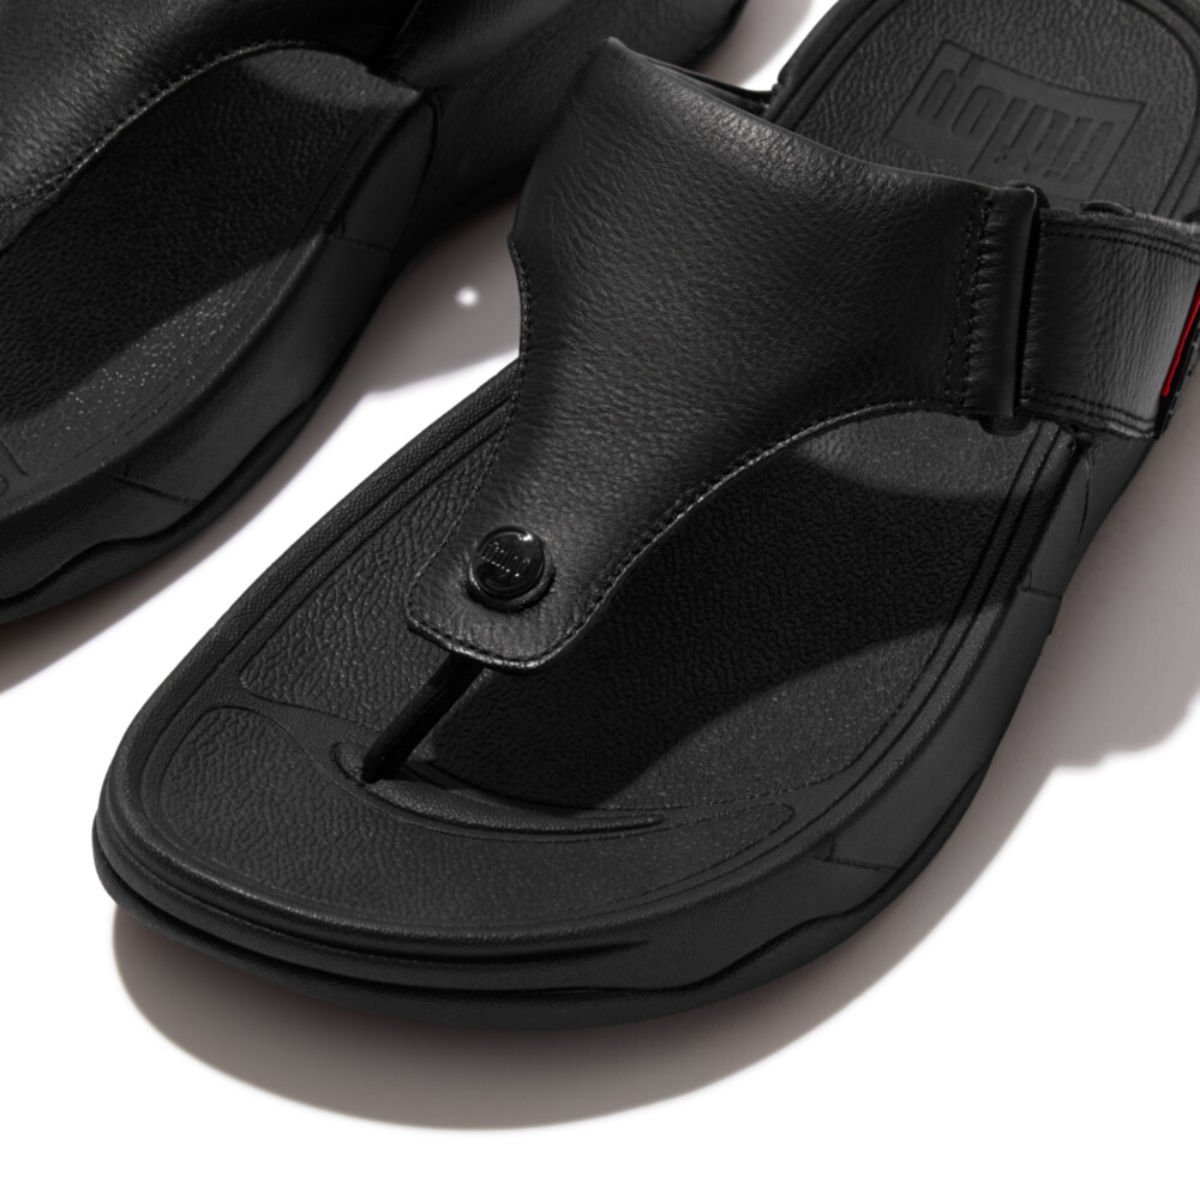 TRAKK II Leather Toe-Post Sandals All Black close up